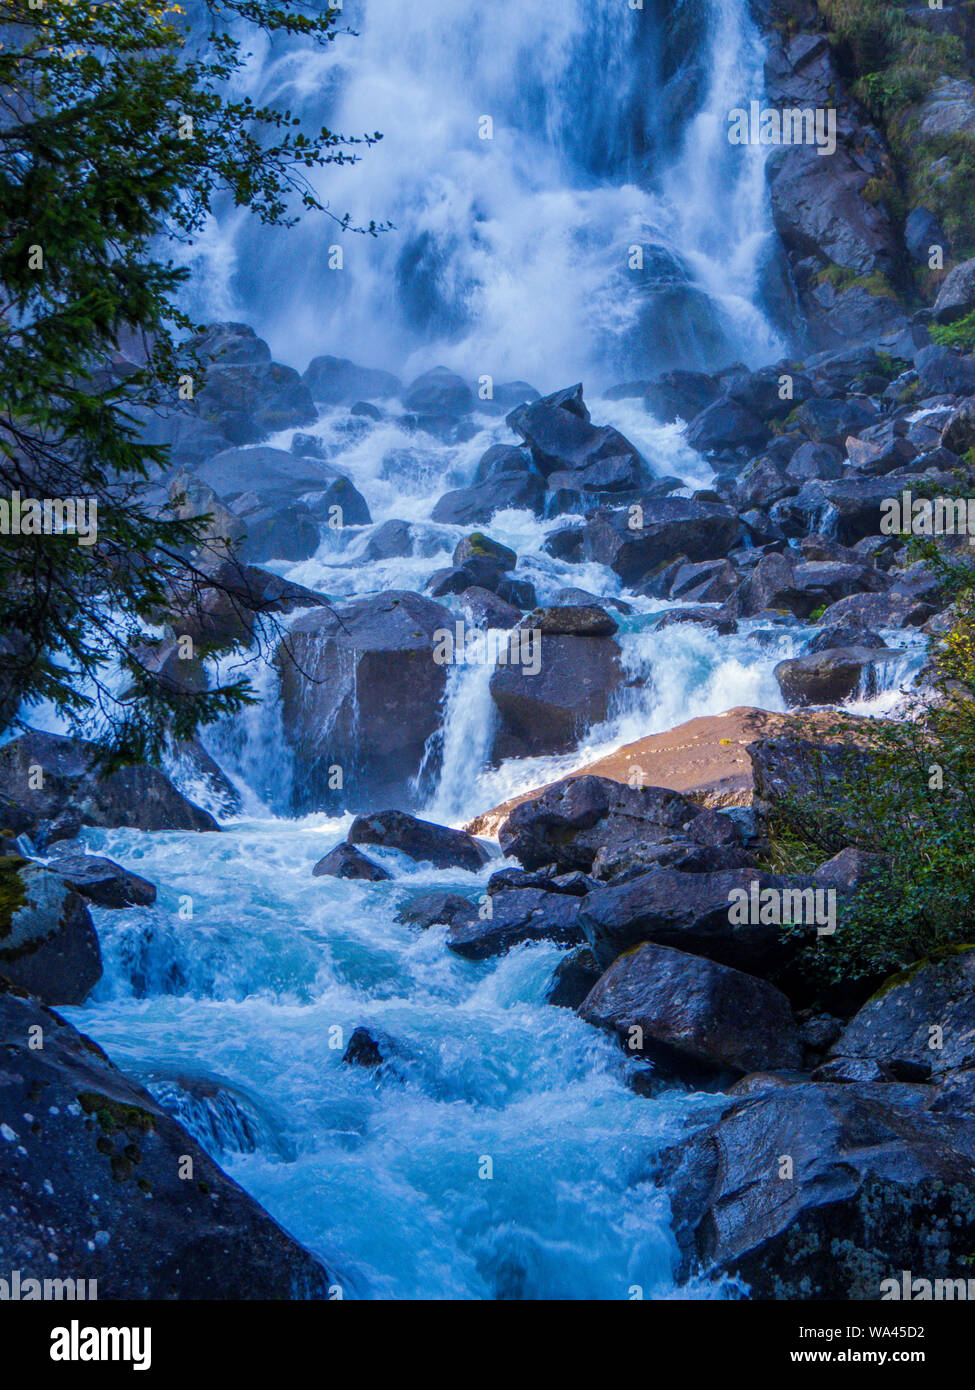 Nardis Laris cascate, Parco Naturale Adamello Brenta, Trentino Alto Adige,  Dolomiti, Italia Foto stock - Alamy